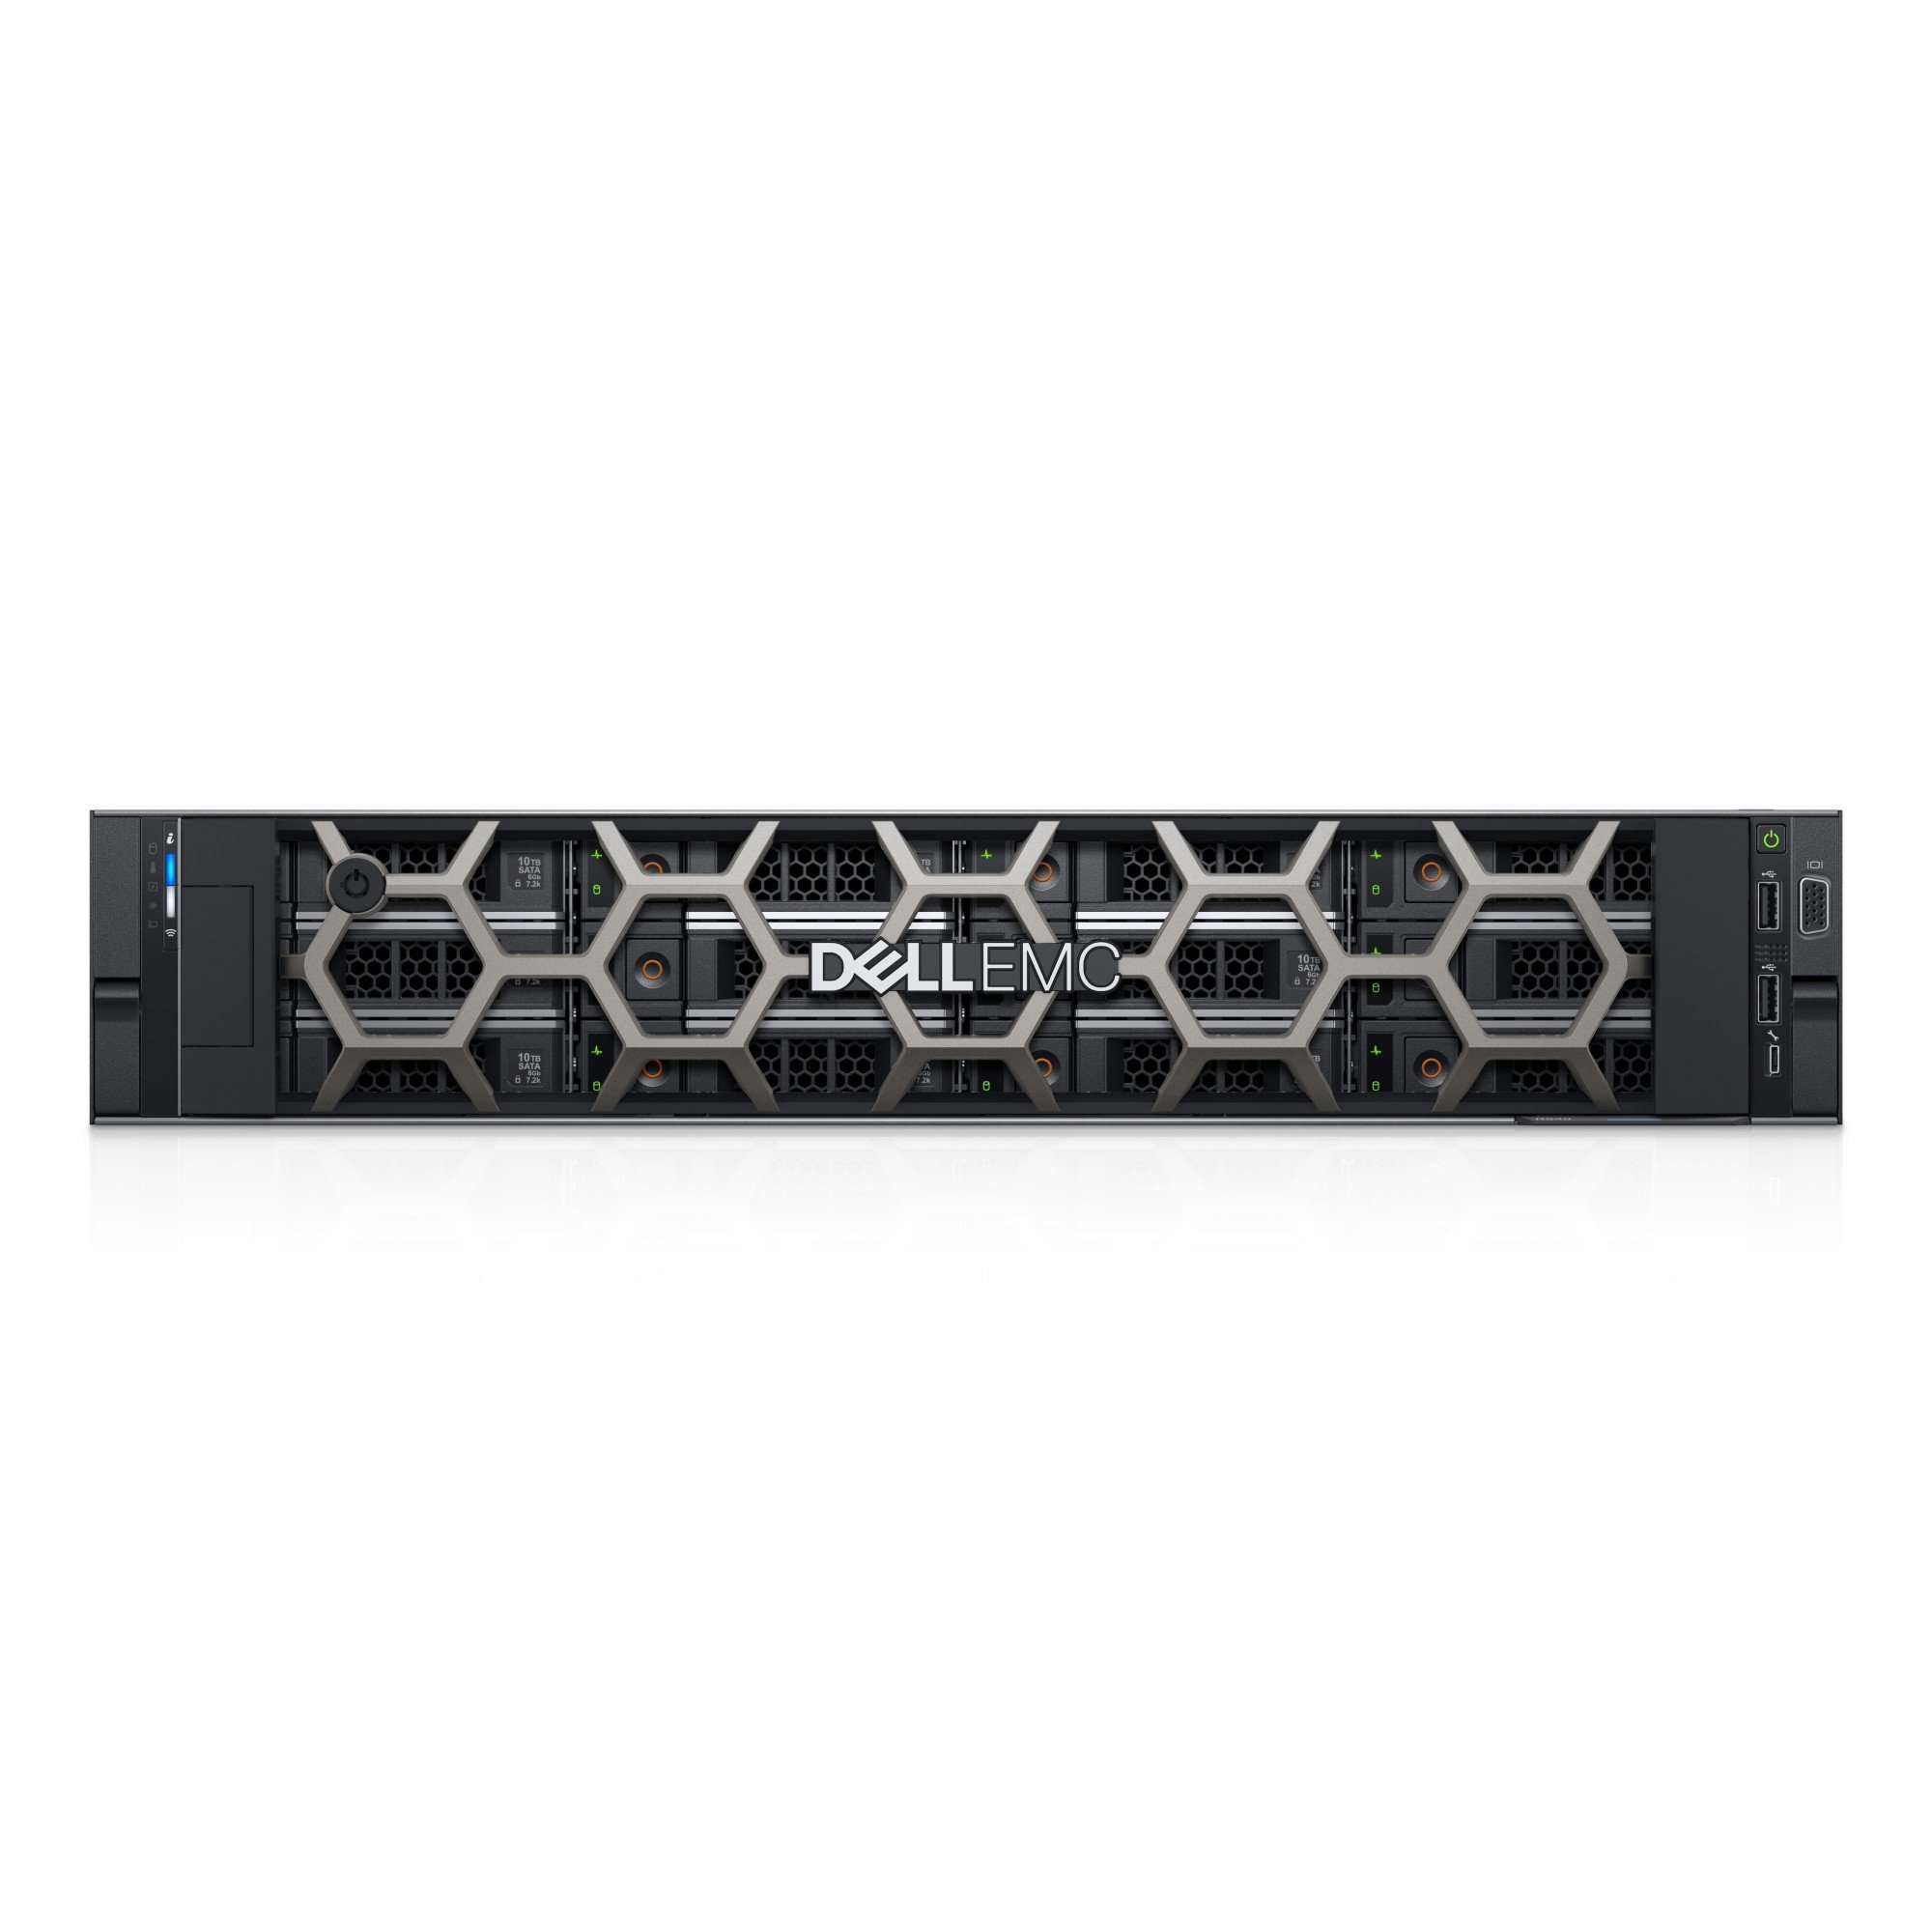 Dell PowerEdge R540 - server tuyệt vời cho doanh nghiệp